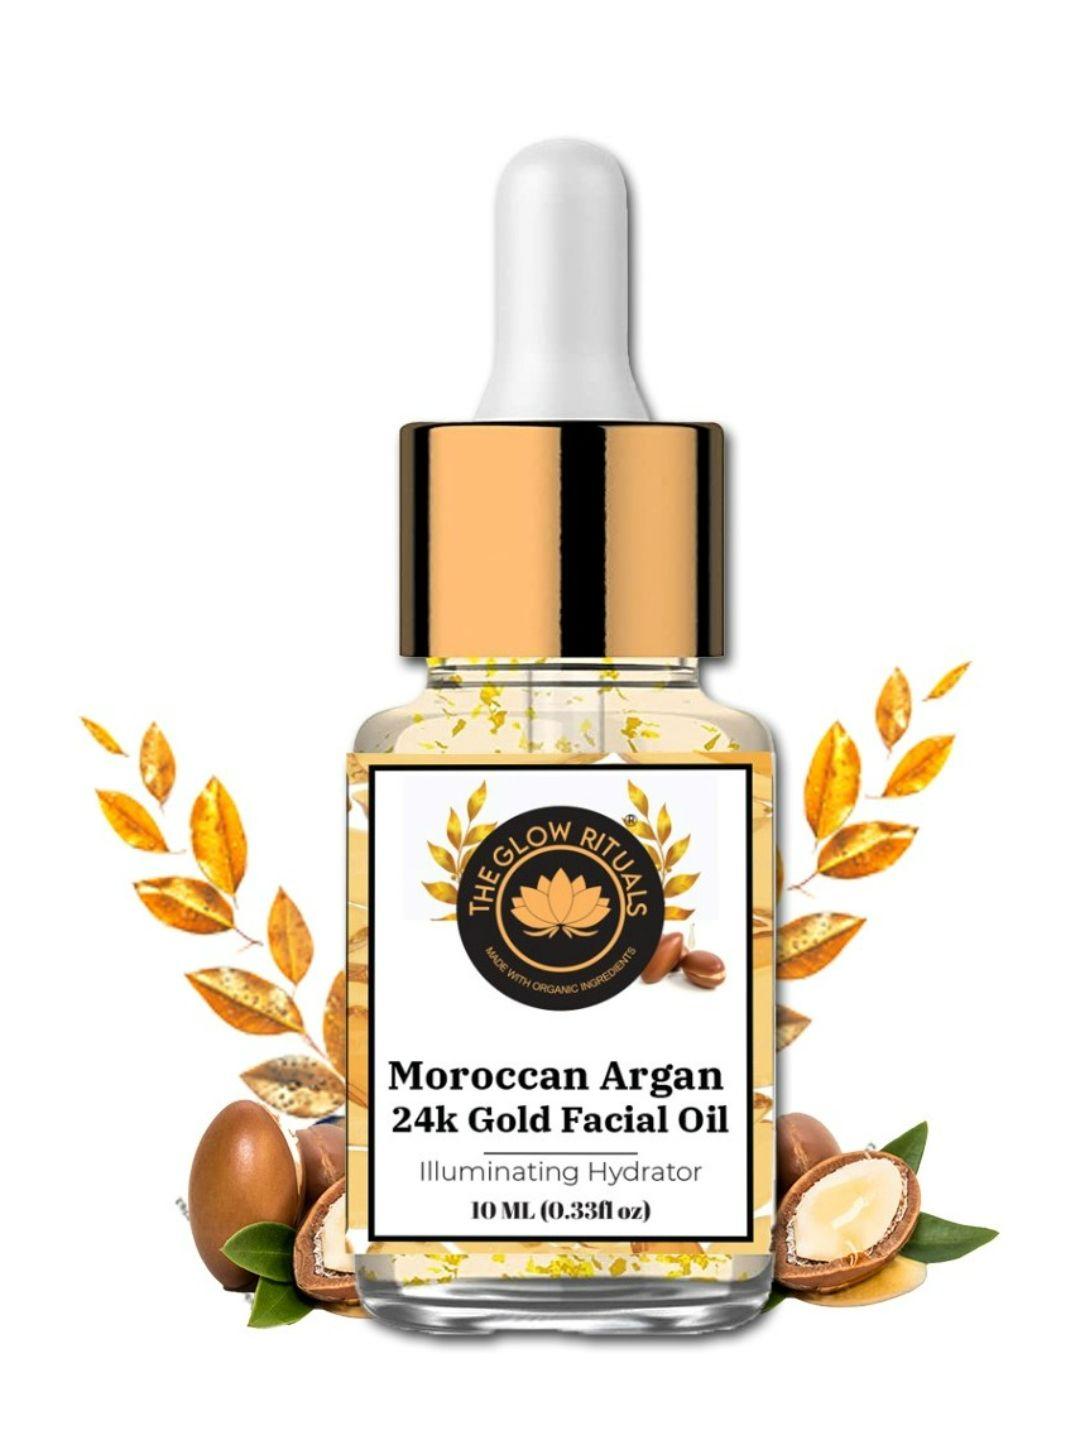 the glow rituals illuminating hydrator moroccan argan 24k gold facial oil 10ml